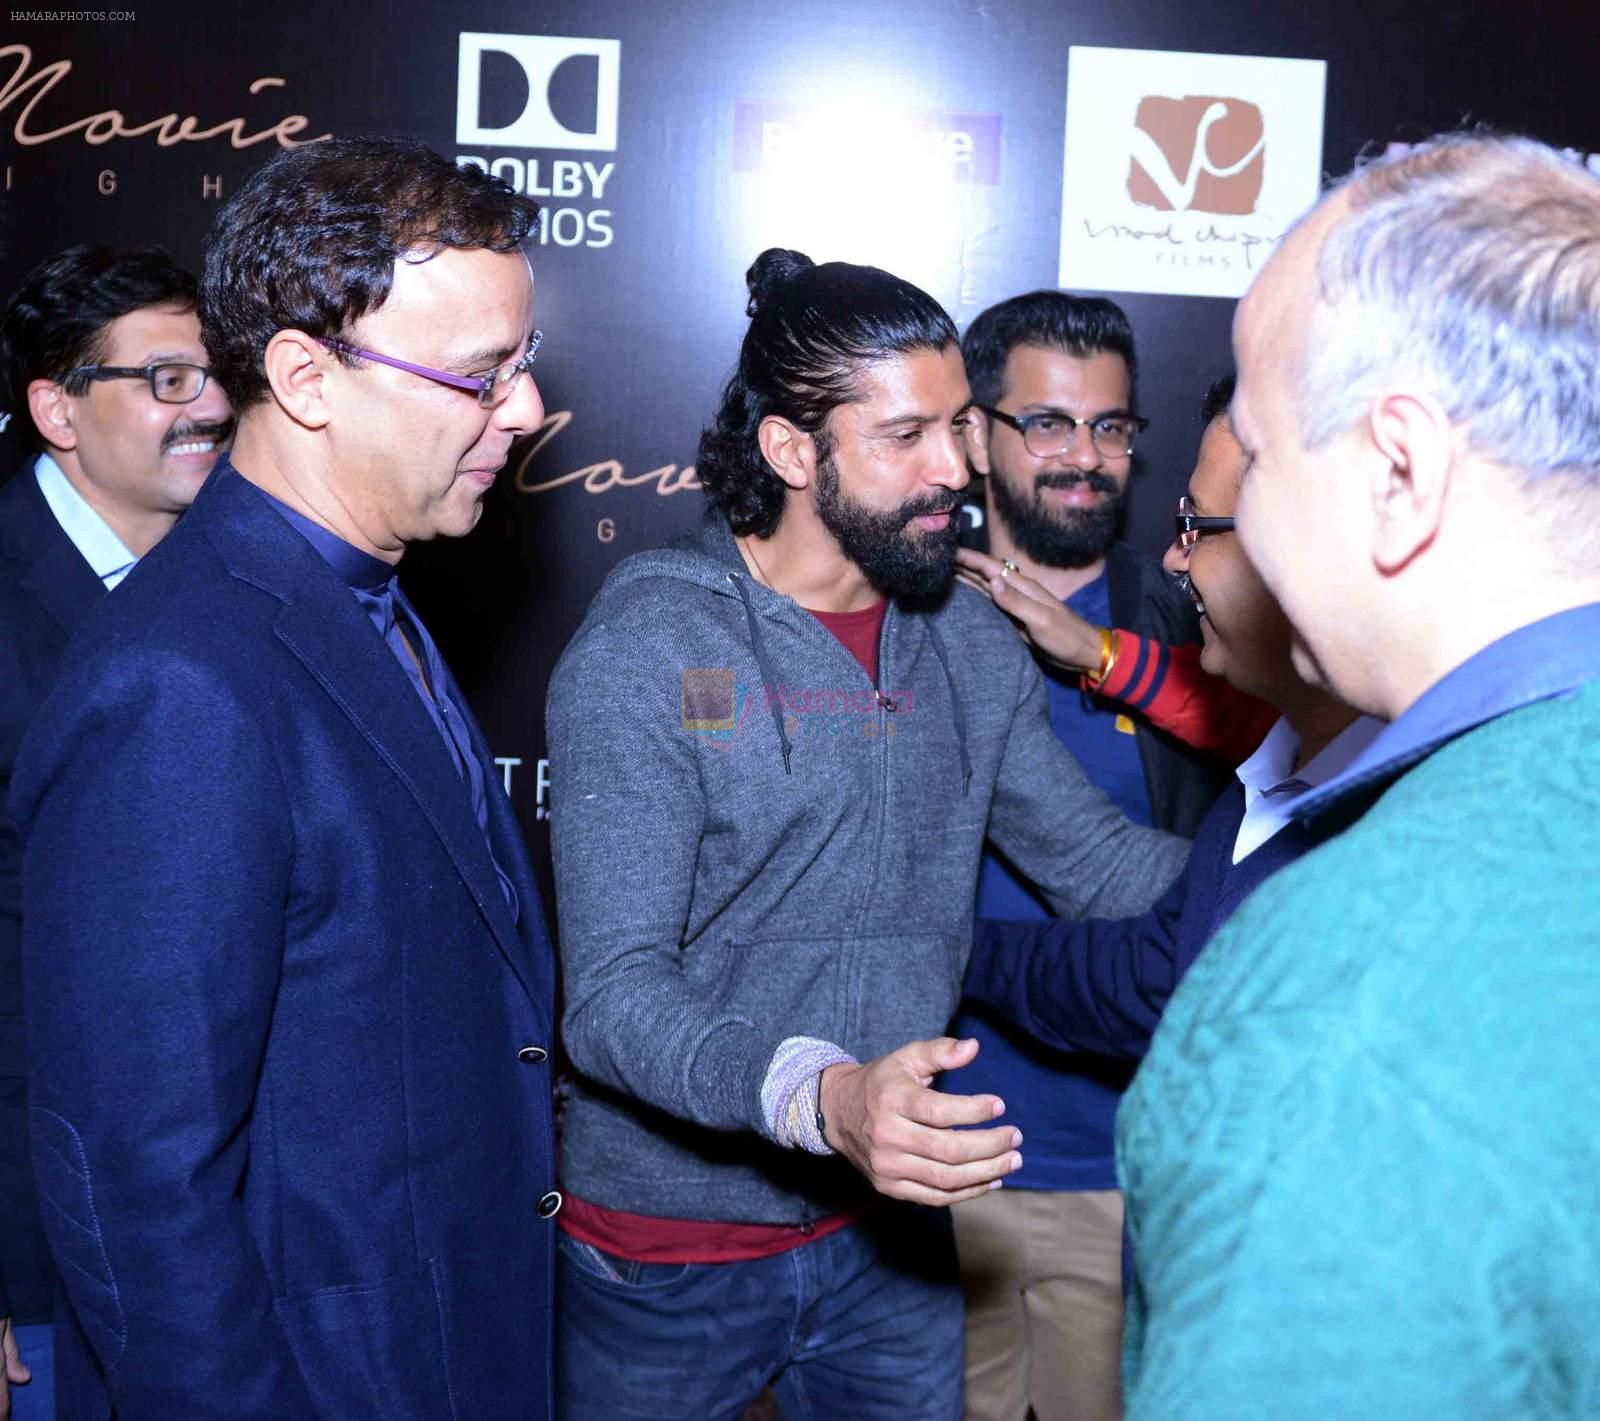 Aditi Rao Hydari, Vidhu Vinod Chopra, Farhan Akhtar, Bejoy Nambiar, Arvind Kejriwal at Wazir screening in Delhi on 5th Jan 2016